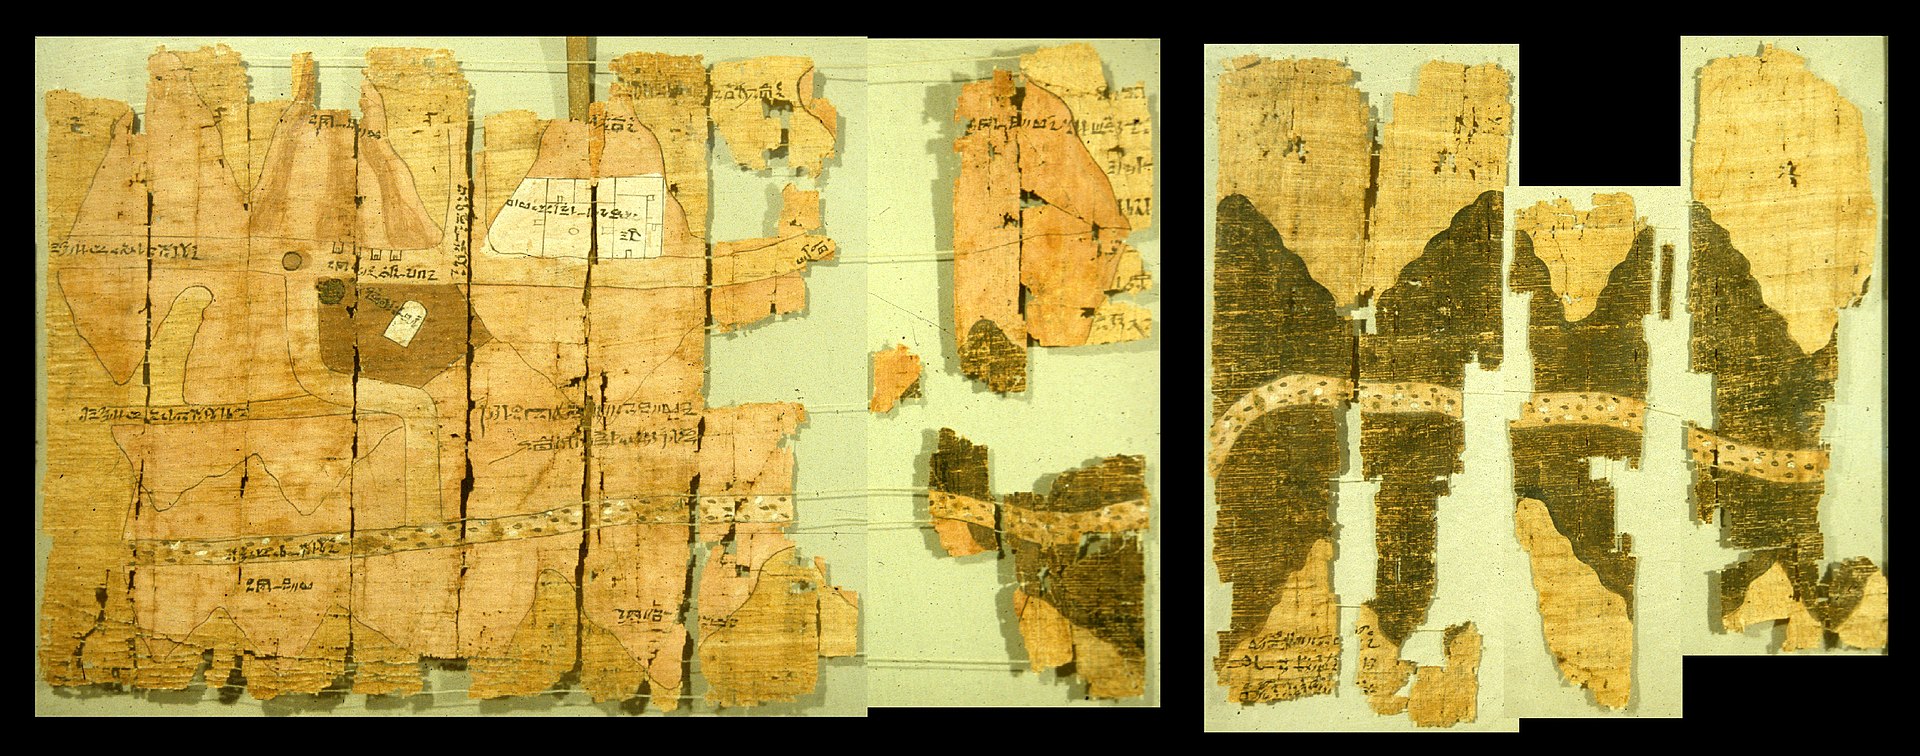 109.-El-oro-en-el-Antiguo-Egipto-papiro-minas.jpg